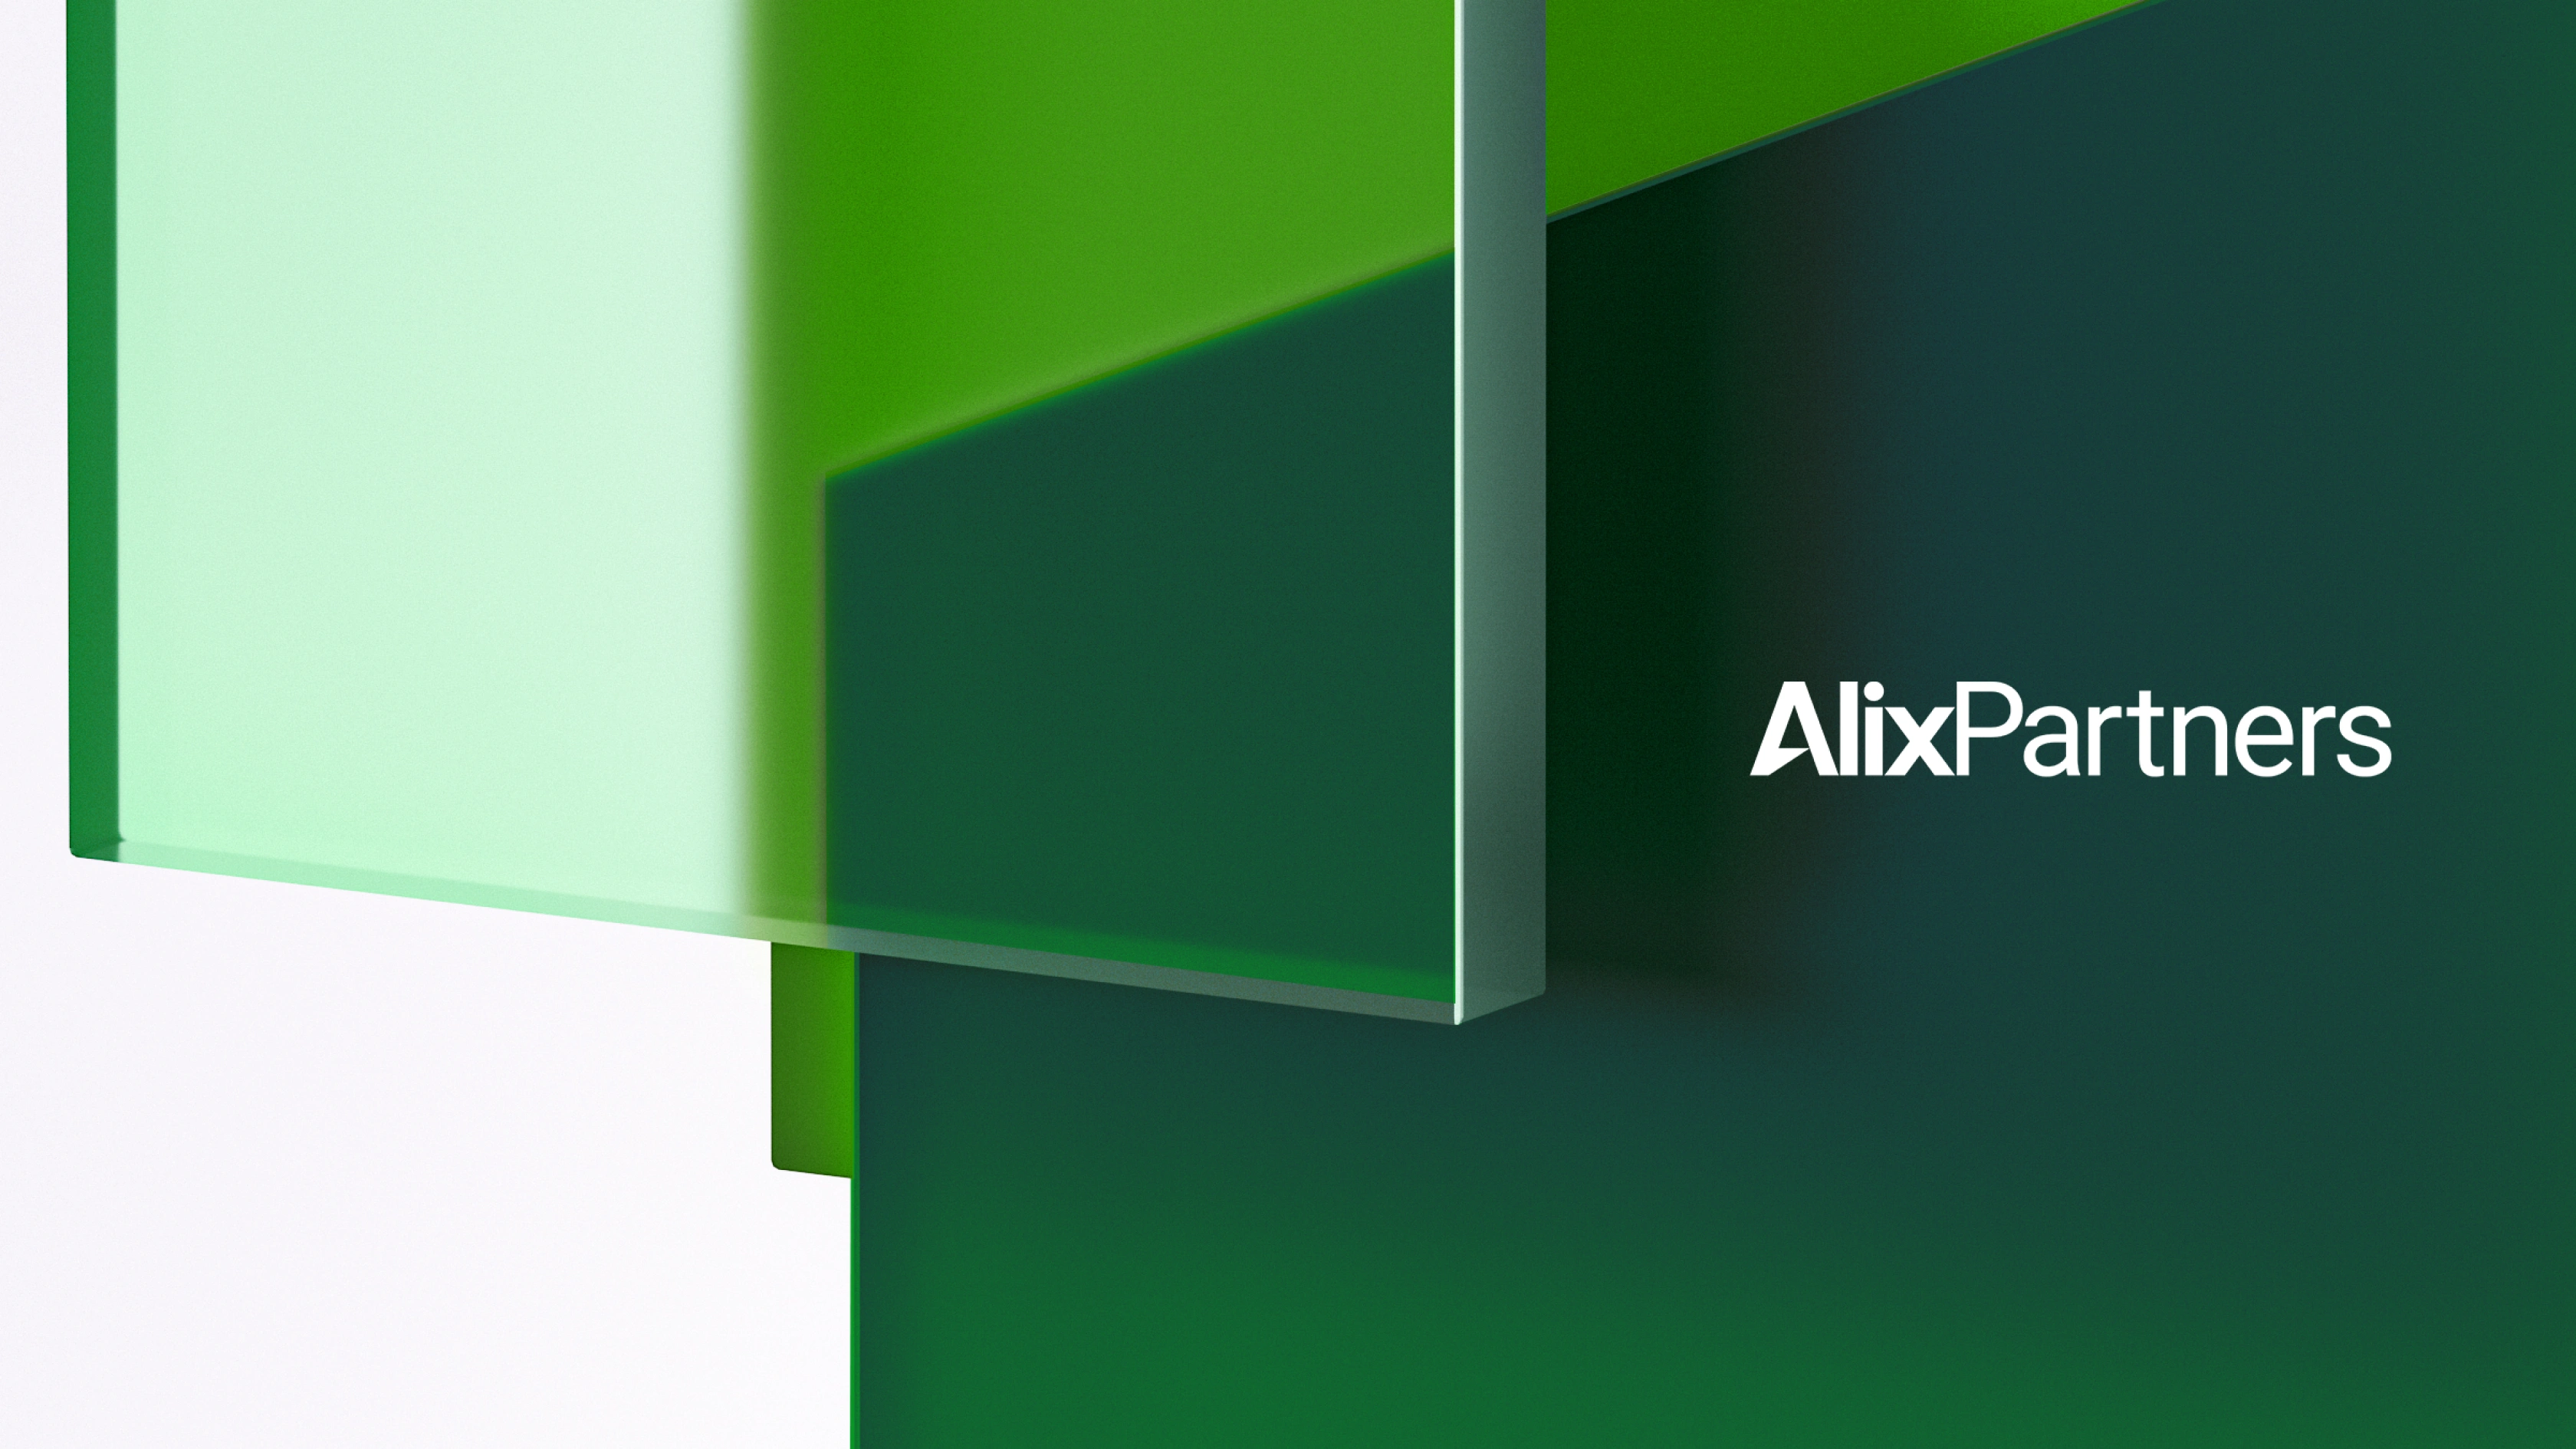 AlixPartners green logo pattern